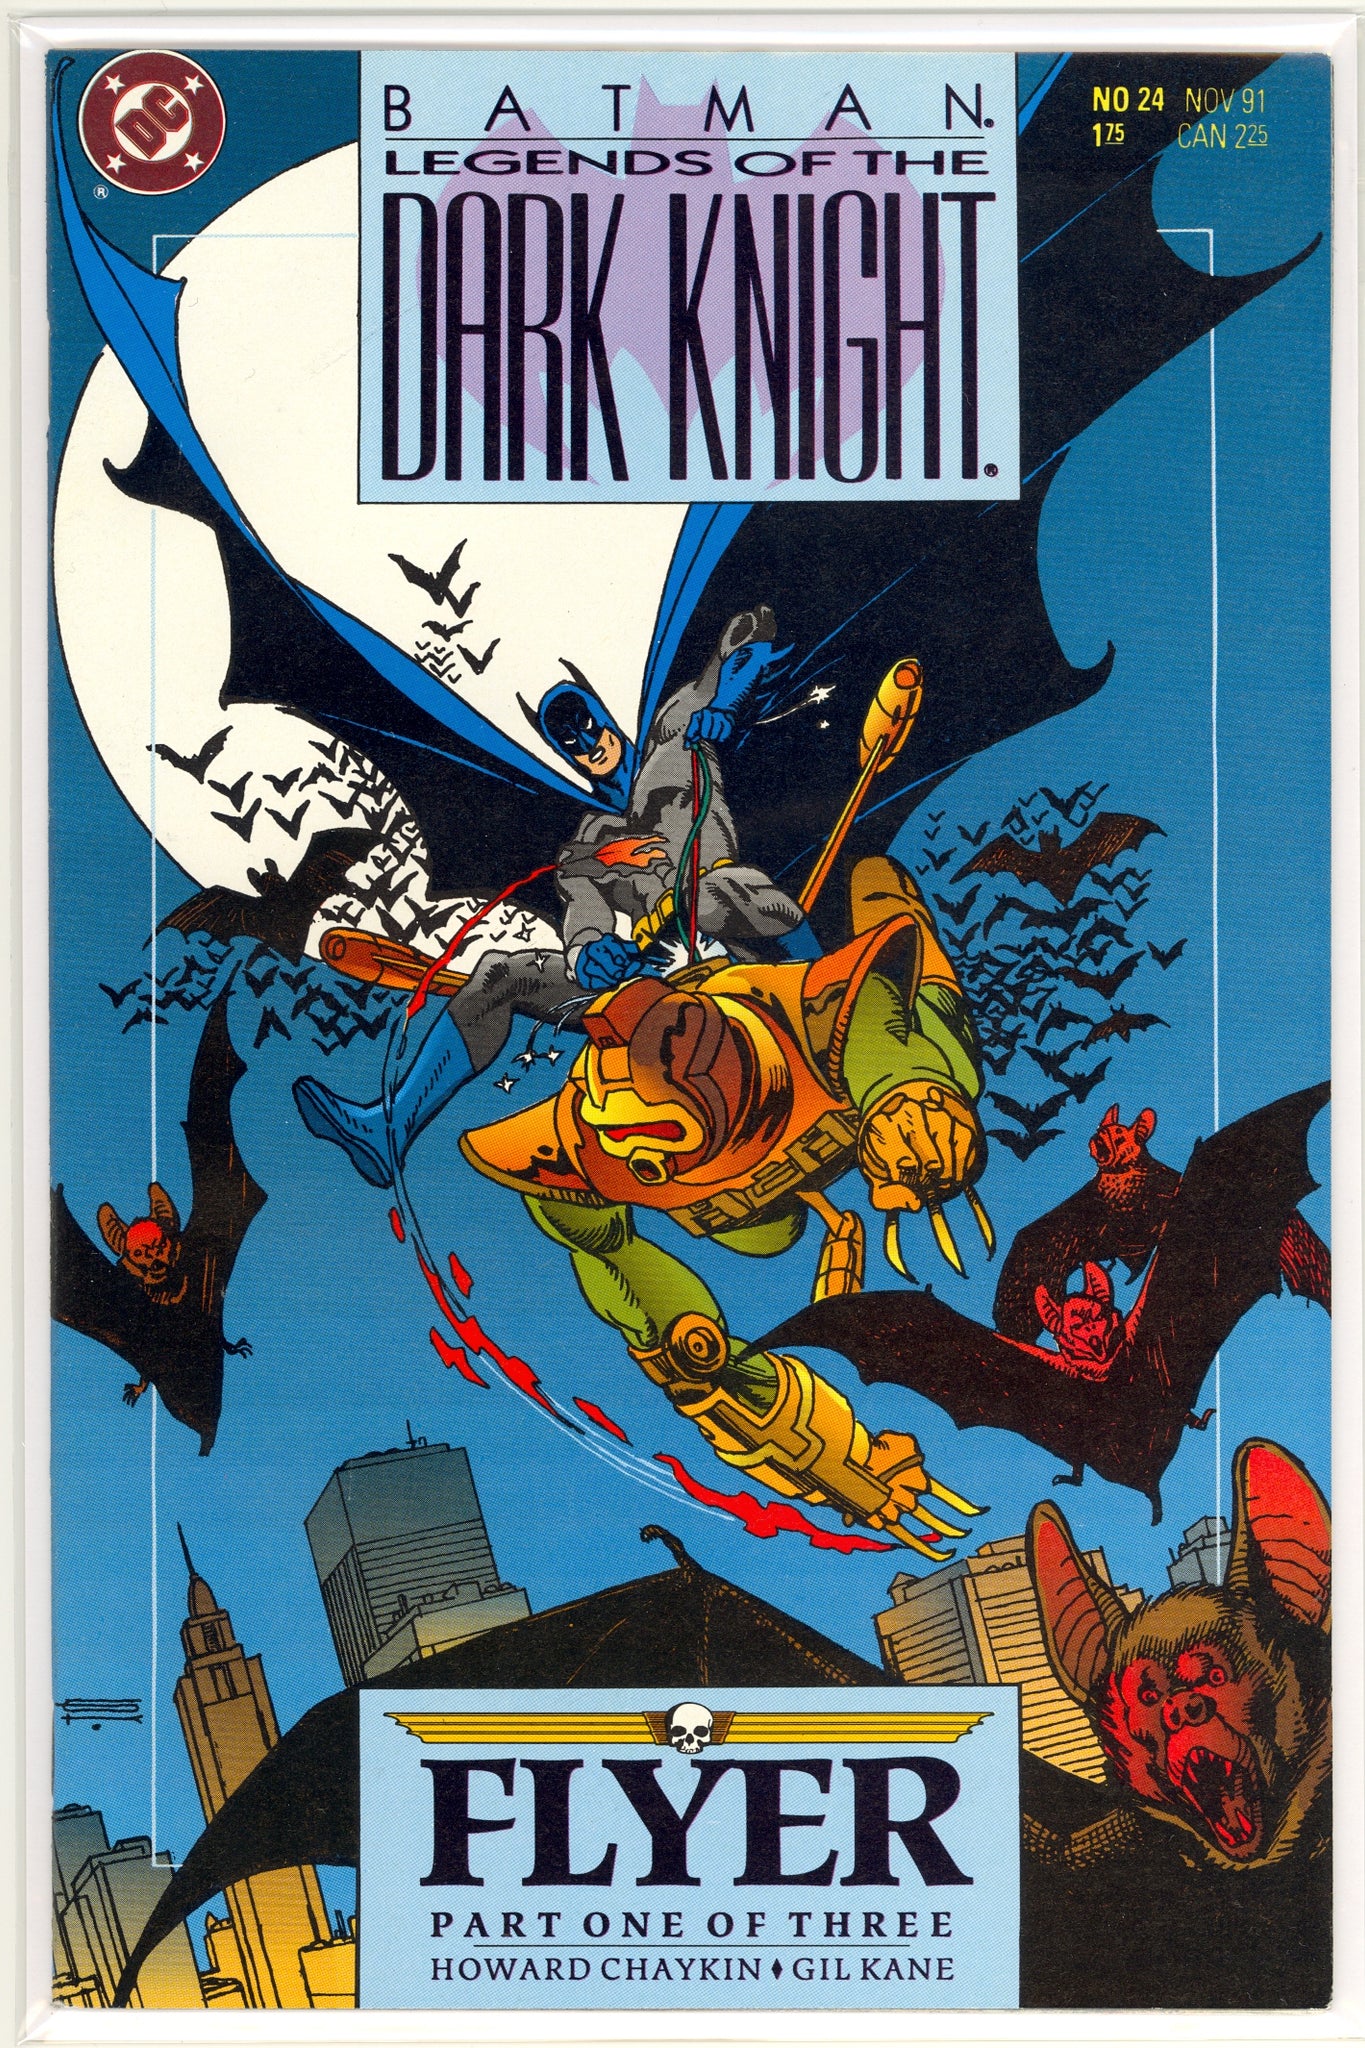 Batman Legends of the Dark Knight #24 (1991)